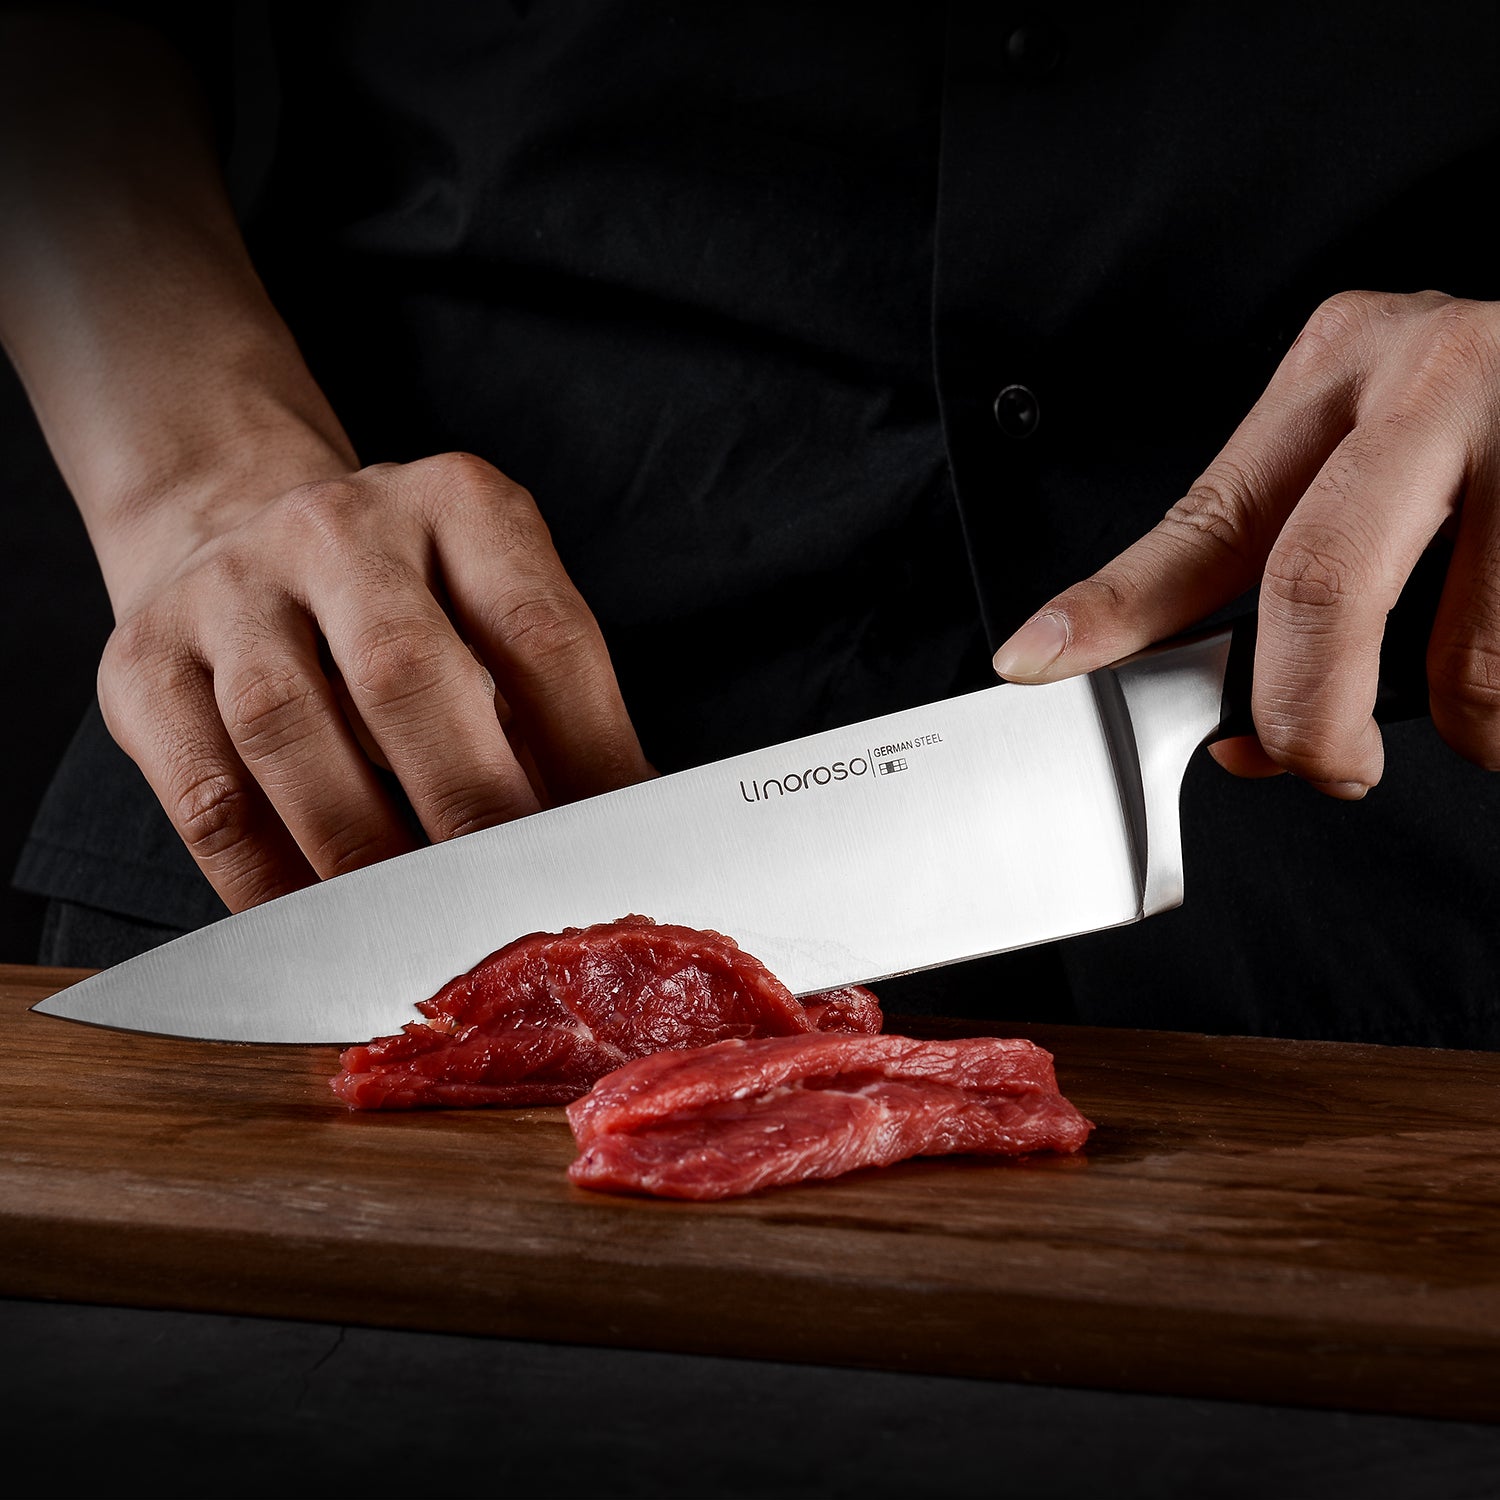 Linoroso 8'' Chef's Knife & Reviews